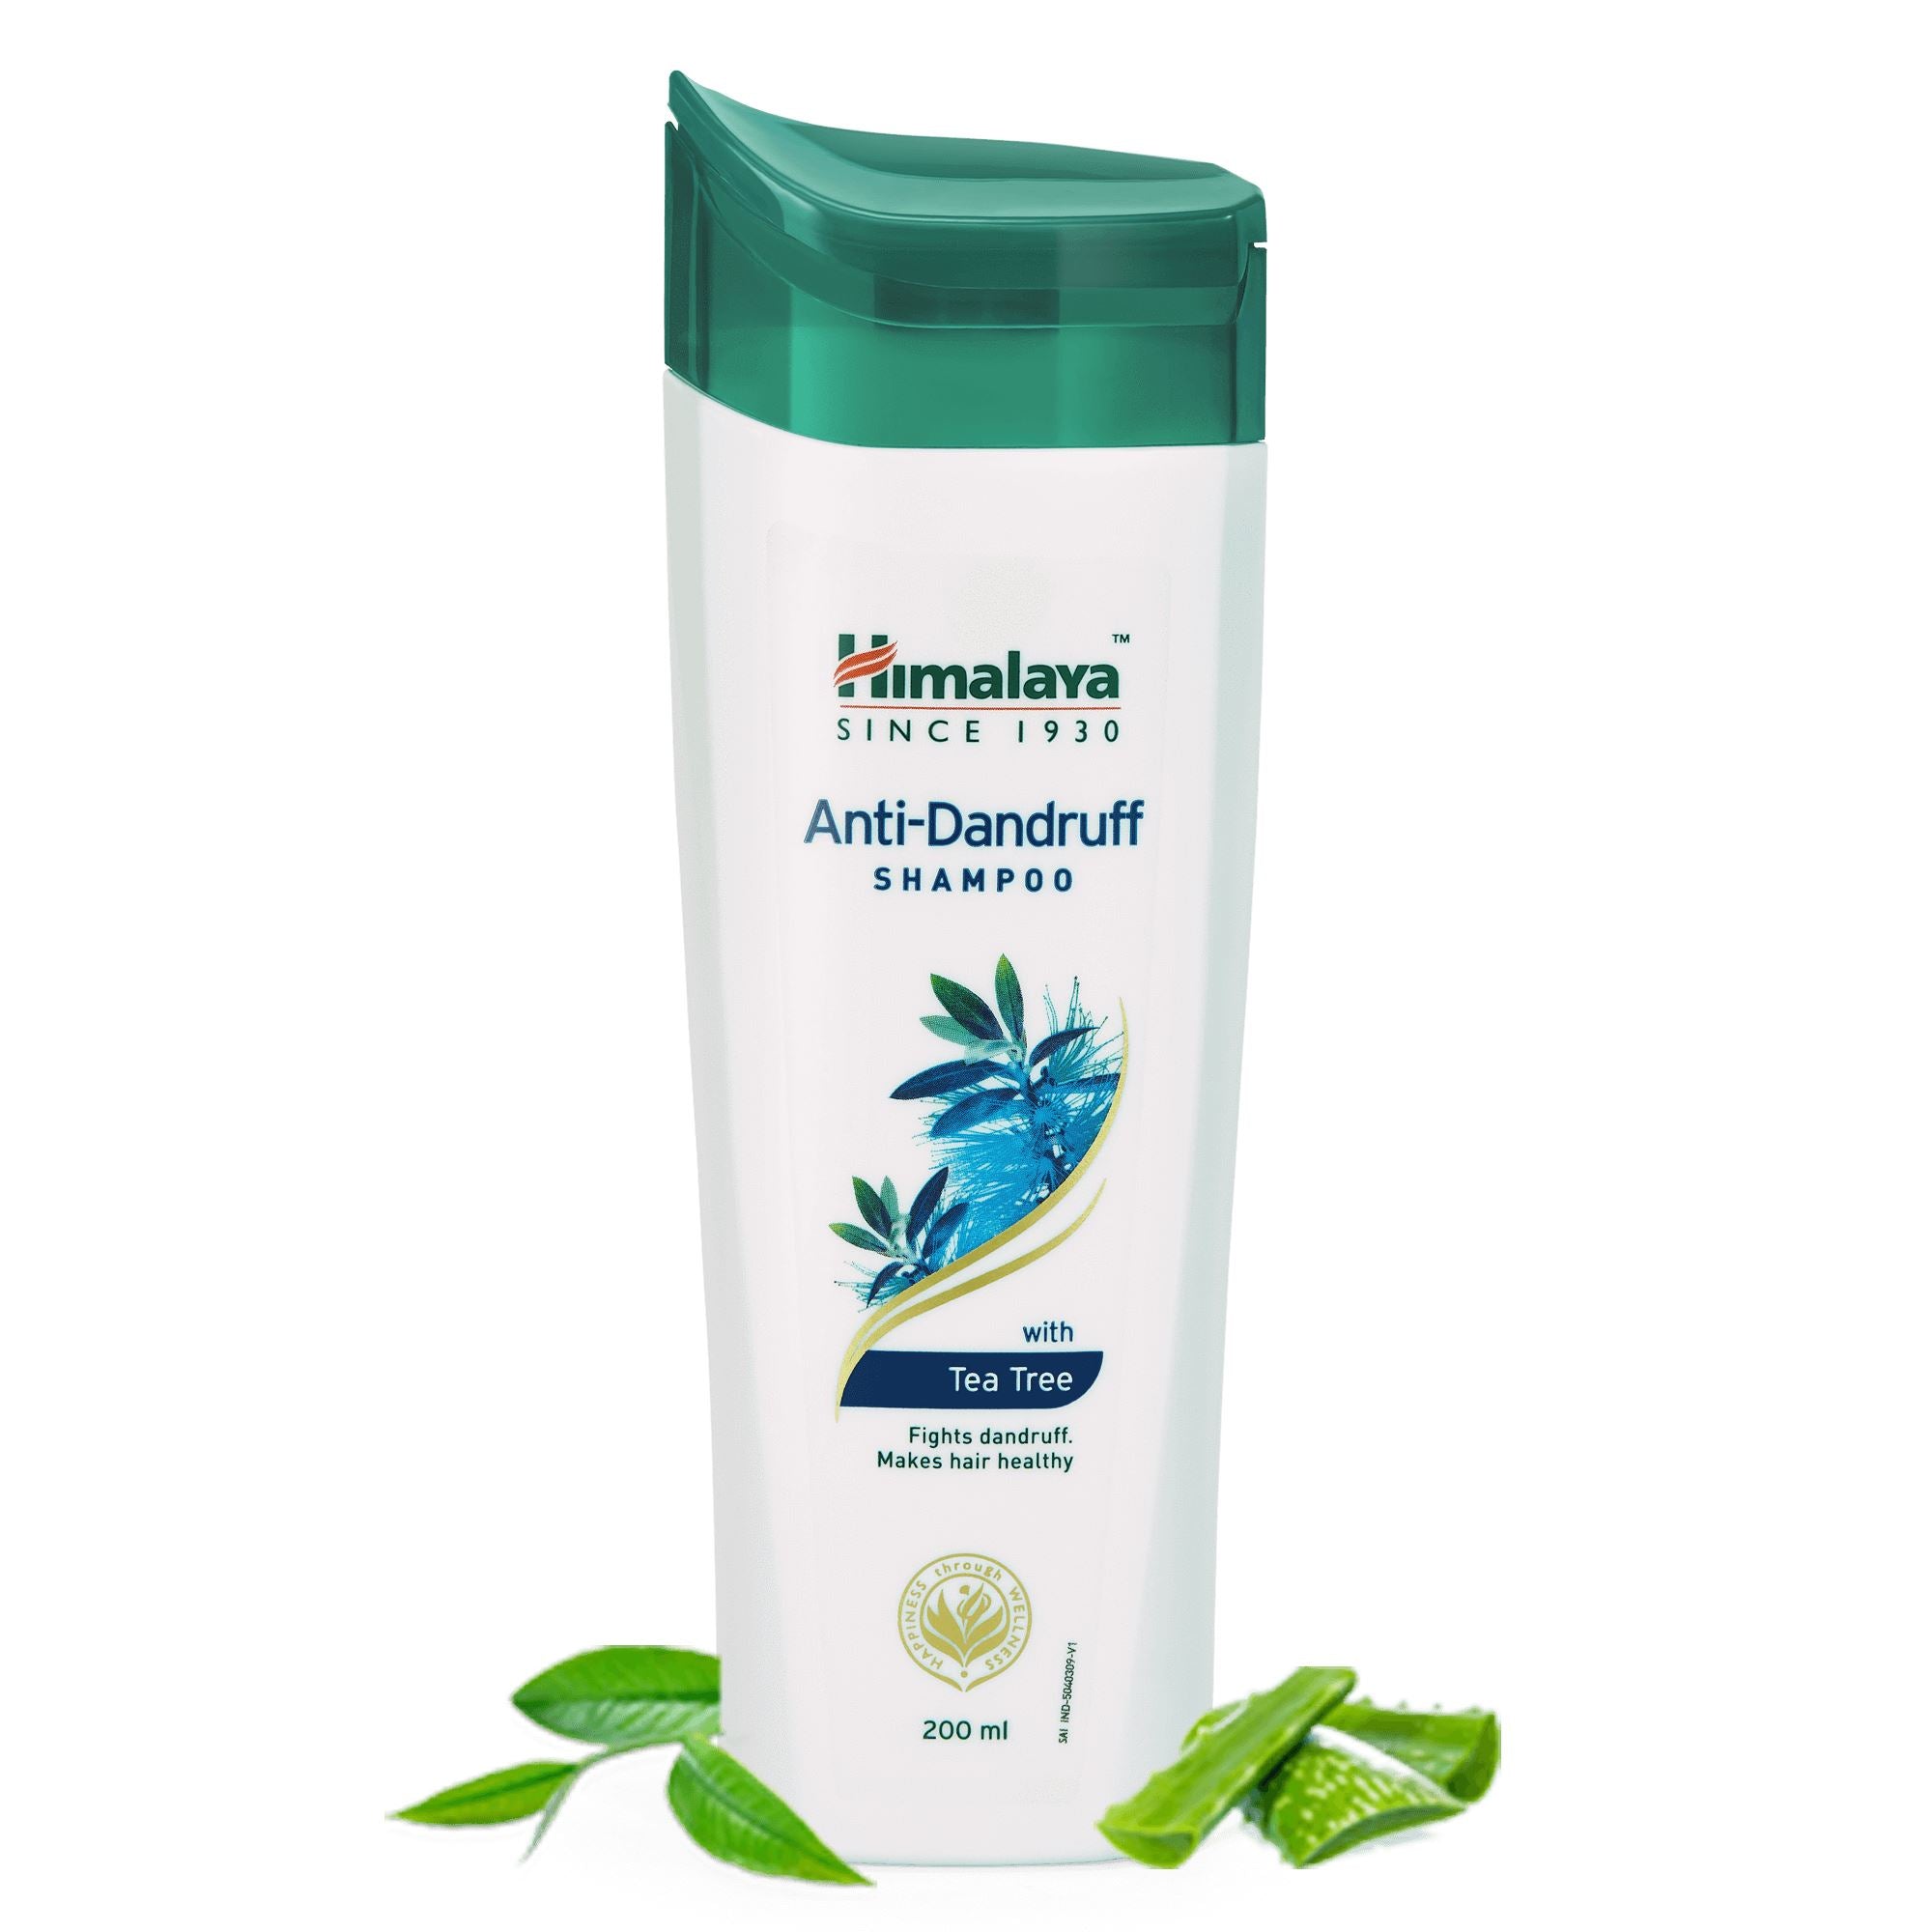 Himalaya Anti-Dandruff Shampoo 200ml - Fights dandruff, makes hair healthy